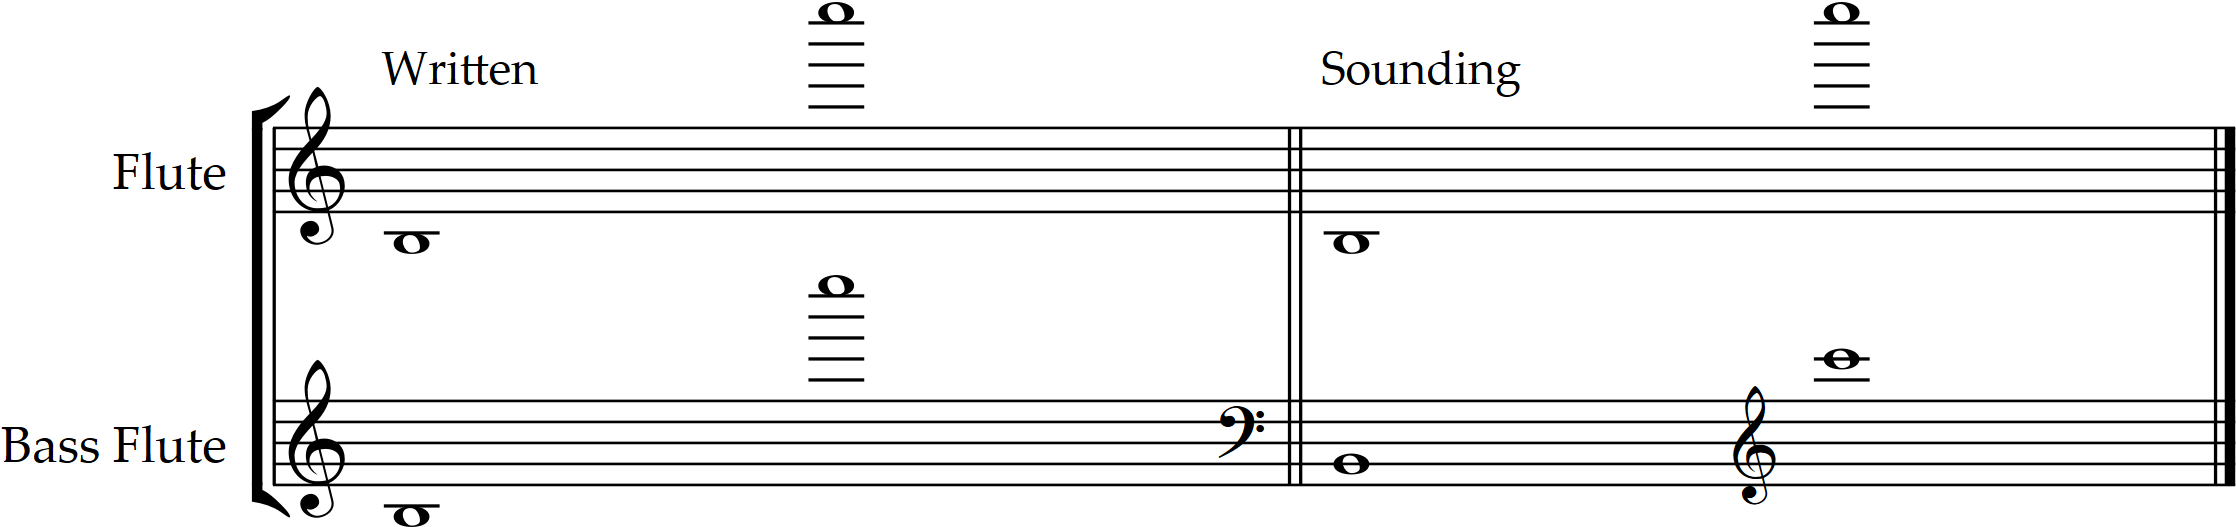 Bass flute range